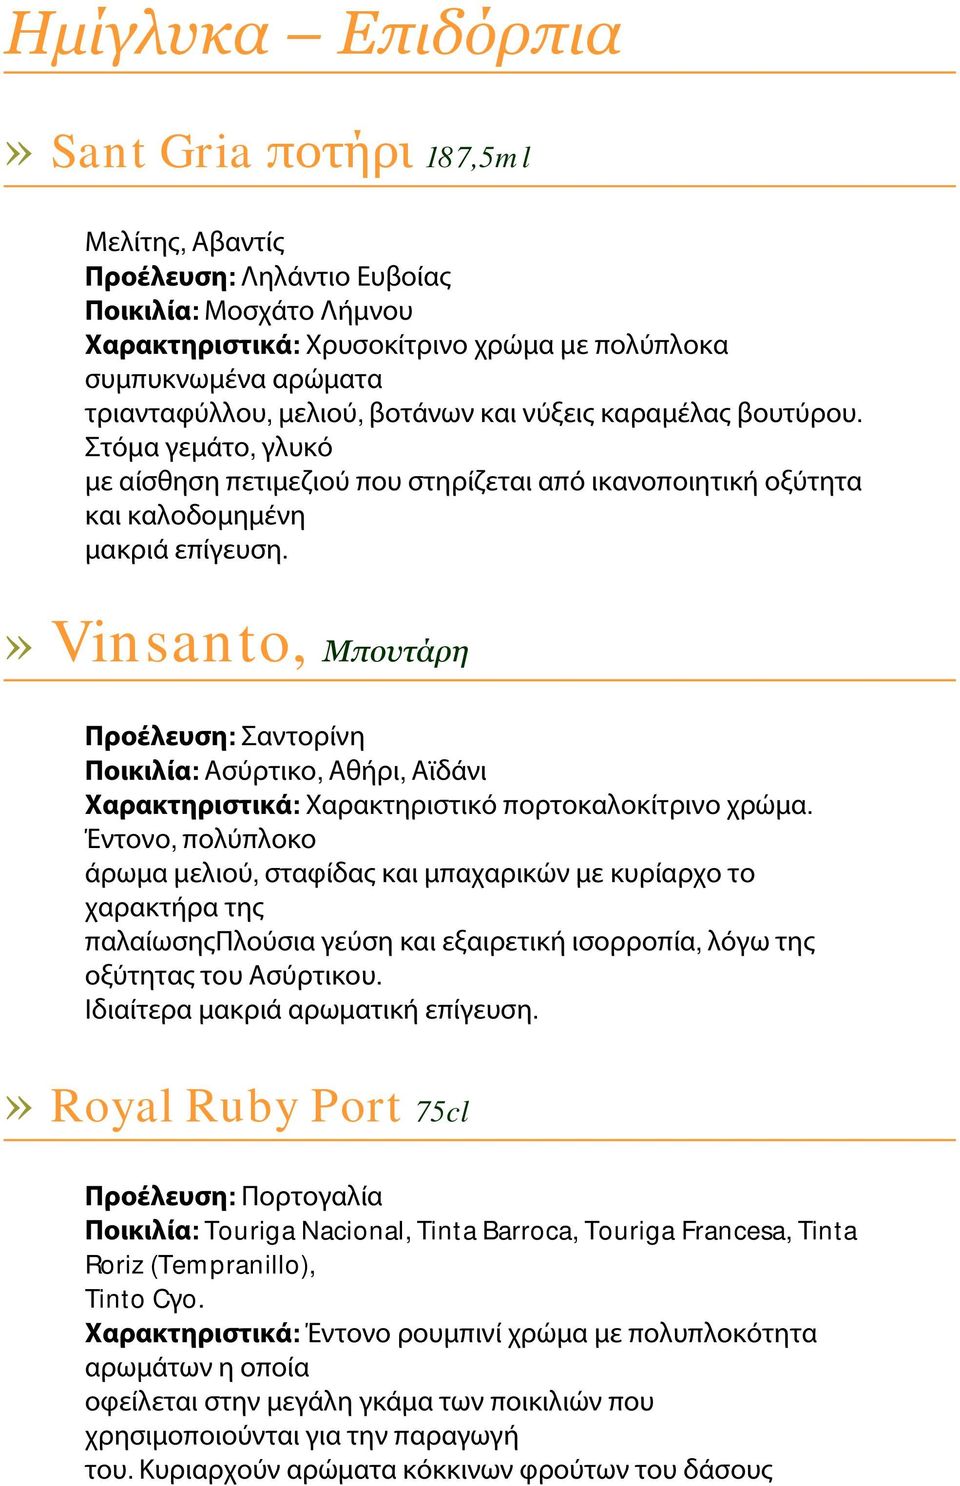 » Vinsanto, Μπουτάρη Προέλευση: Σαντορίνη Ποικιλία: Ασύρτικο, Αθήρι, Αϊδάνι Χαρακτηριστικά: Χαρακτηριστικό πορτοκαλοκίτρινο χρώμα.